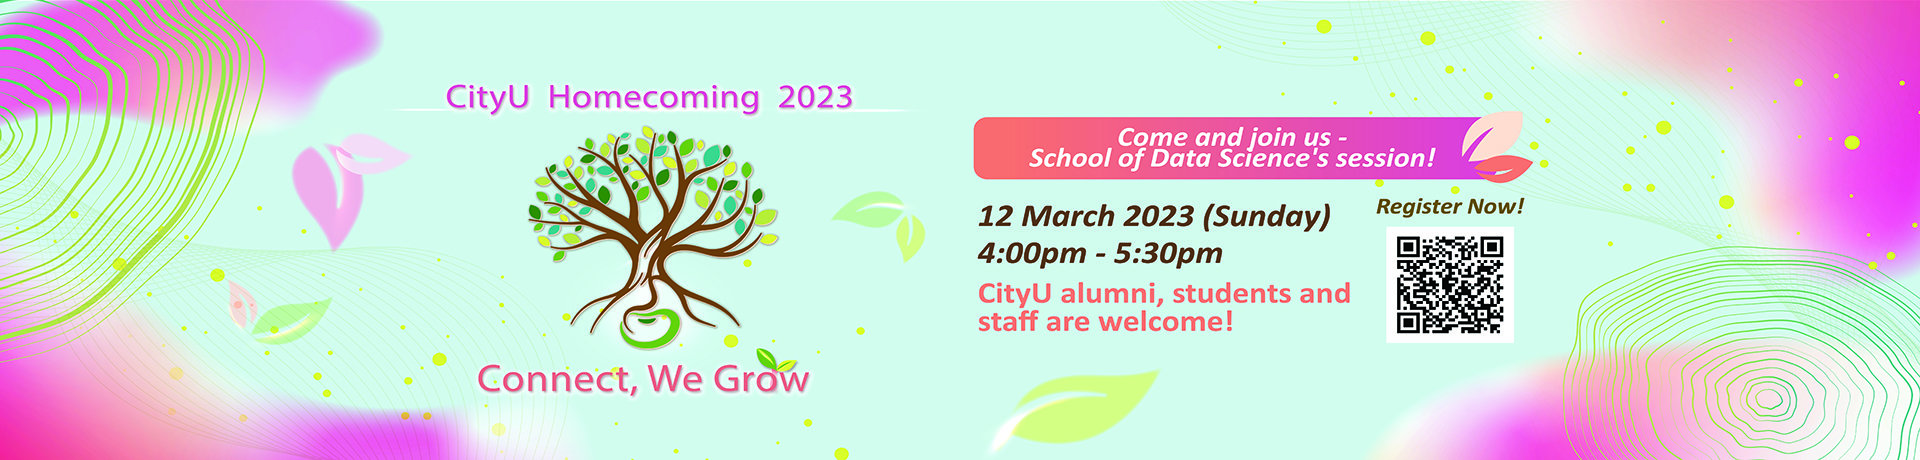 CityU Homecoming 2023 - SDSC’s Data Science Talks